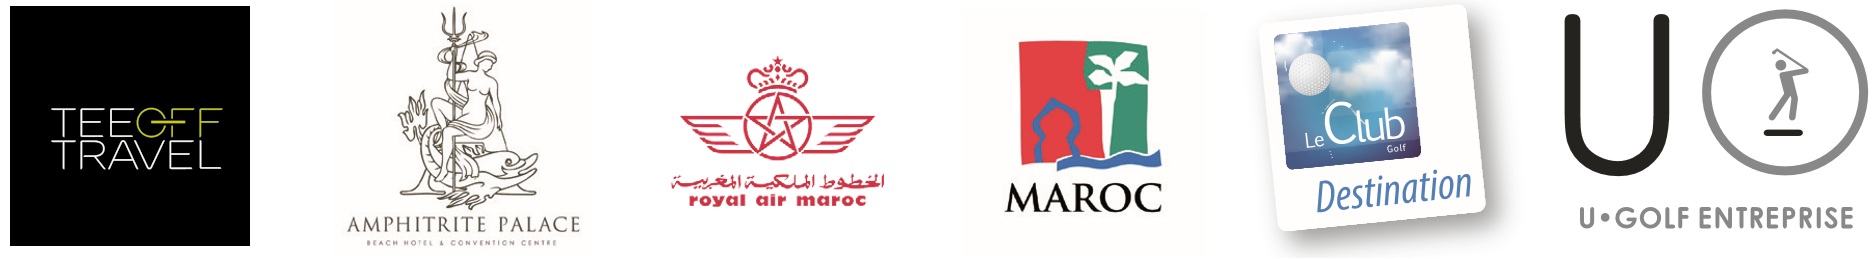 Tee Off Travel • Amphitrite Palace Resort and Spa★★★★★ • Royal Air Maroc • Maroc • LeClub Golf • UGolf Entreprise